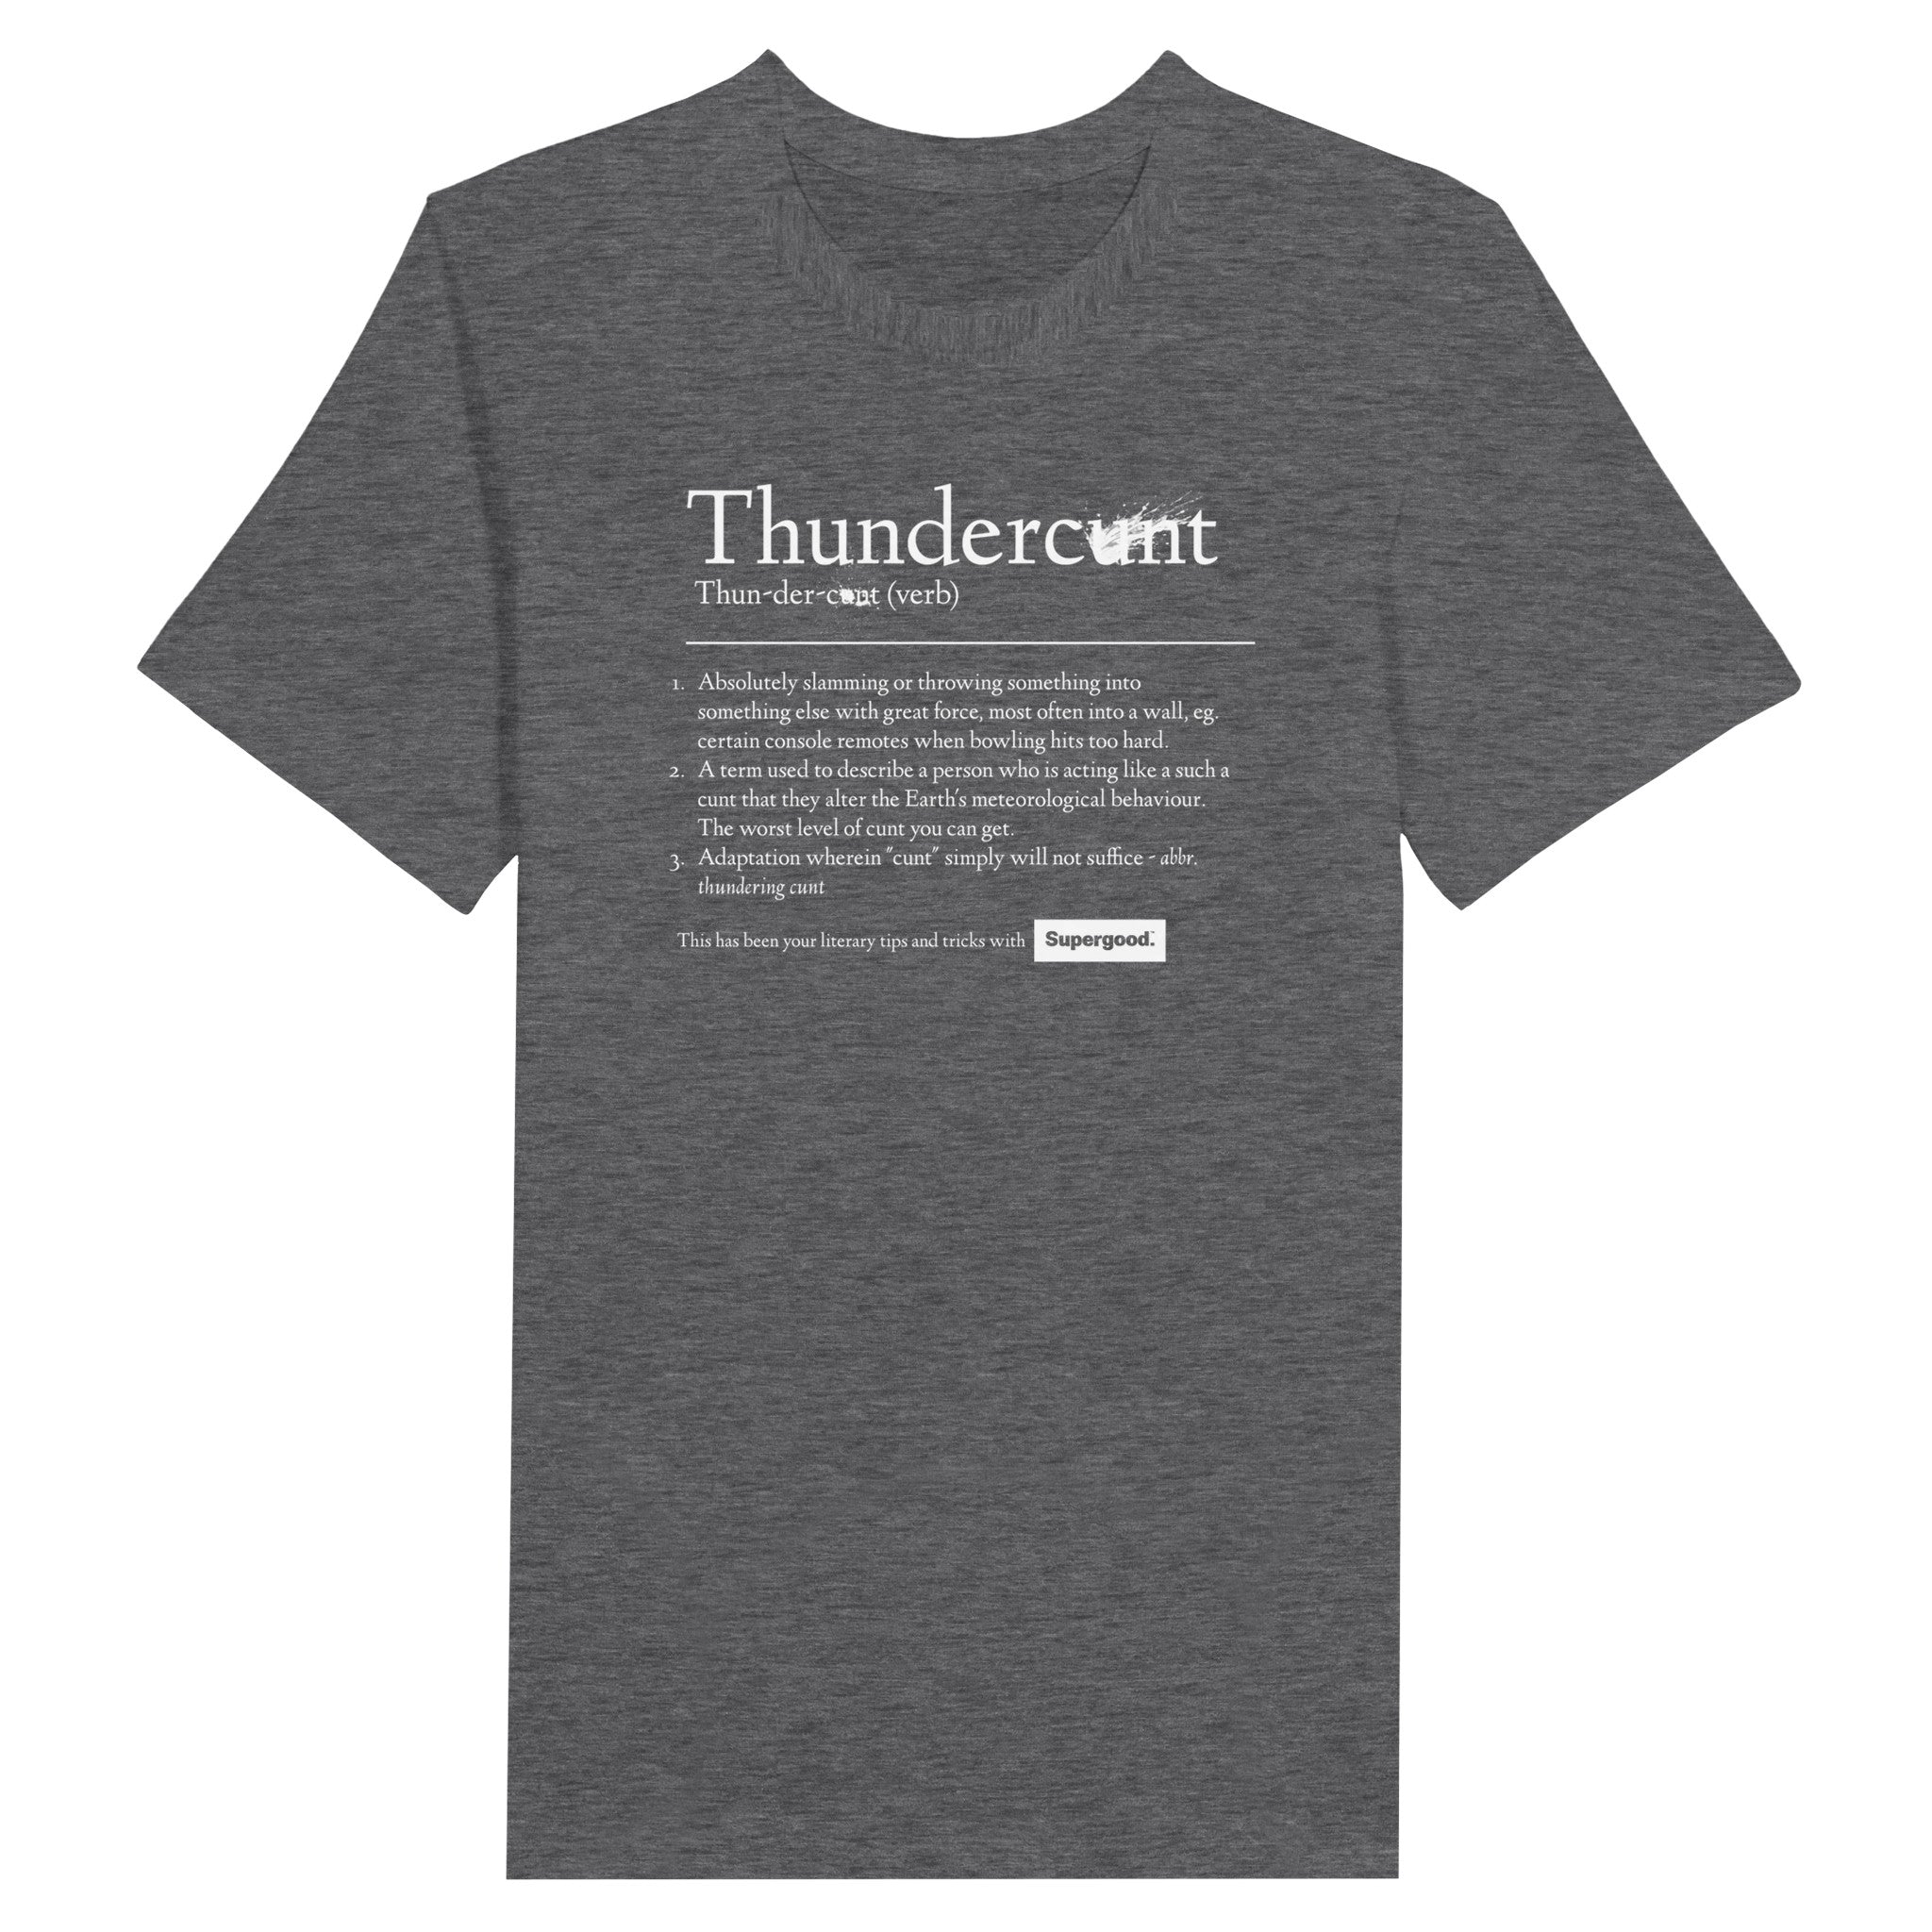 Thunderc*nt Tee, White Text by Supergood.-Supergood.